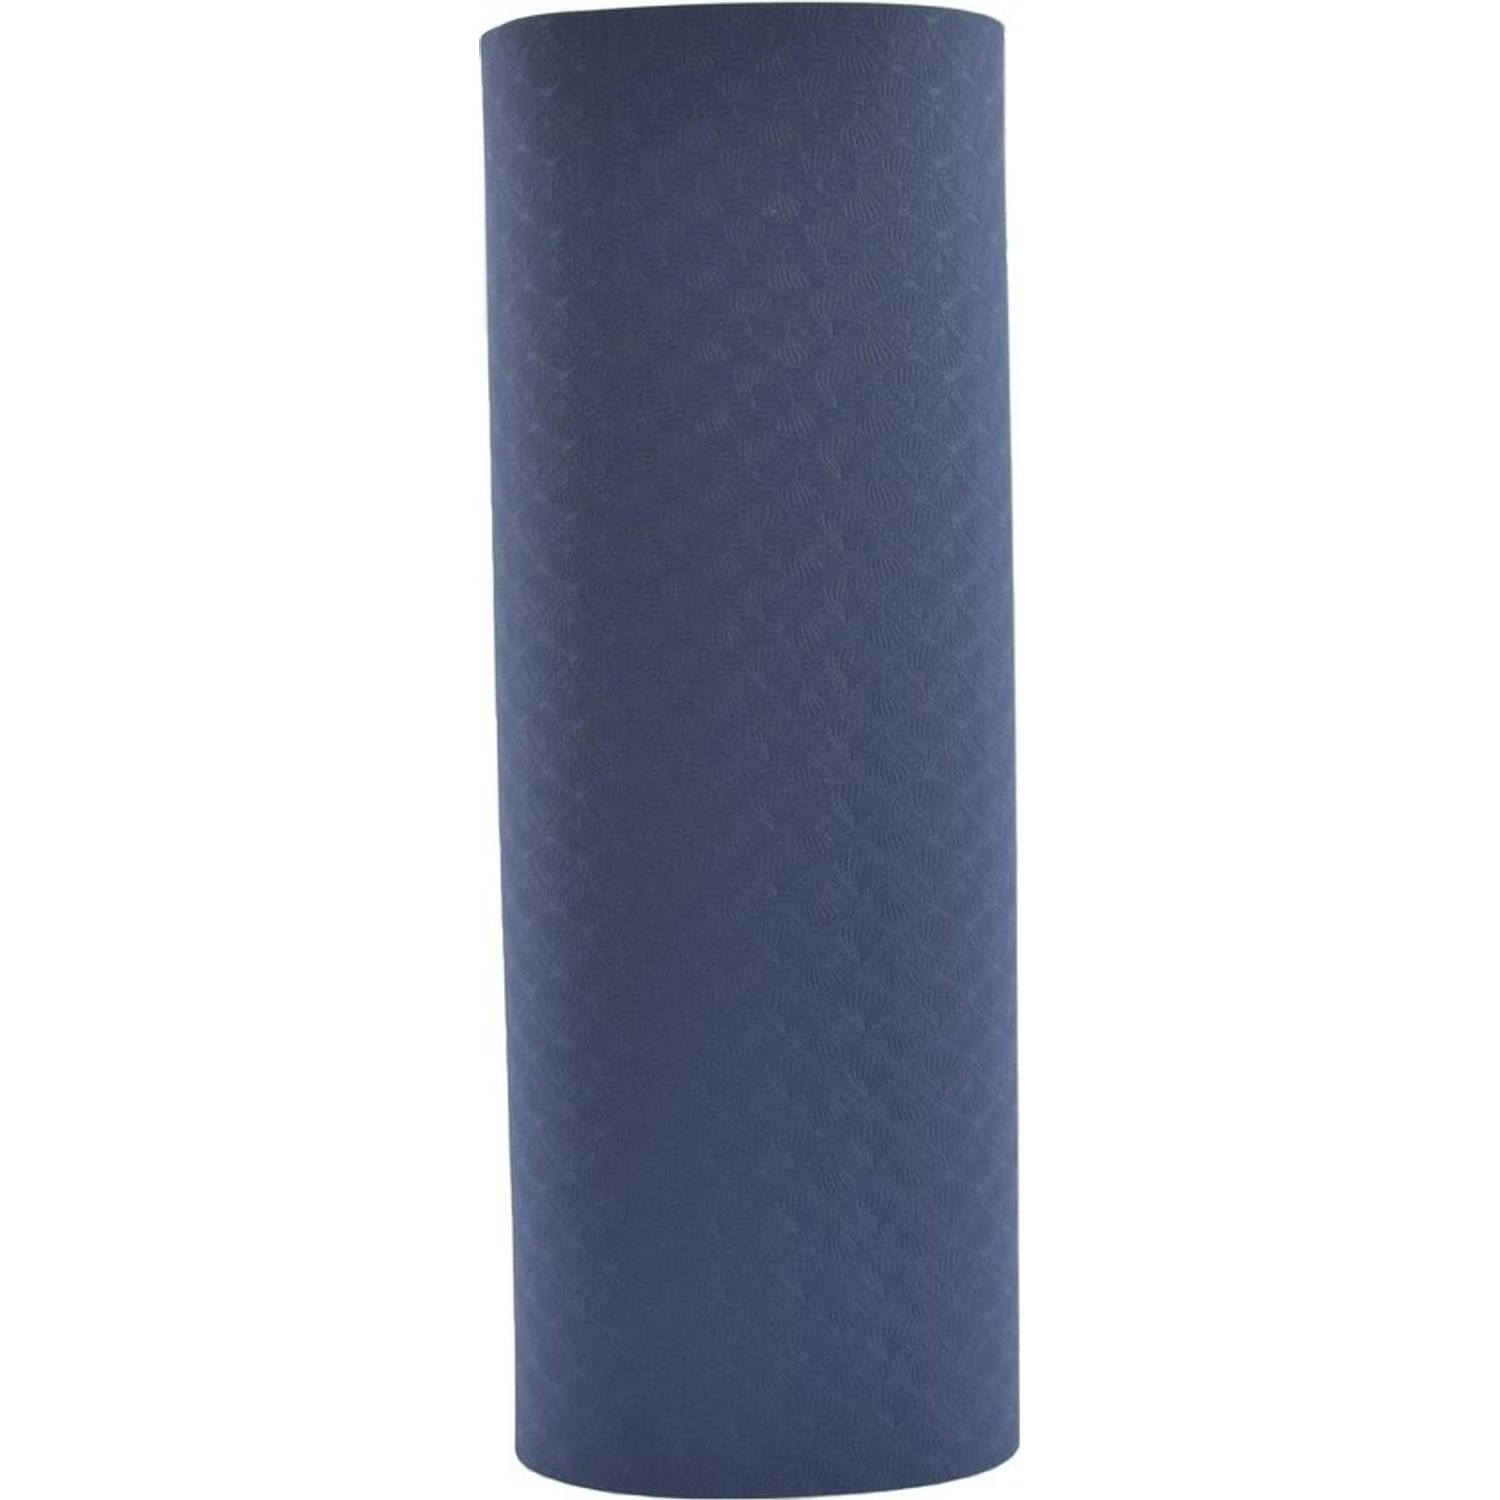 Universele Yogamat - Blauw - 173 x 58 x 0.6 cm - Fitnessmat - Yogamat